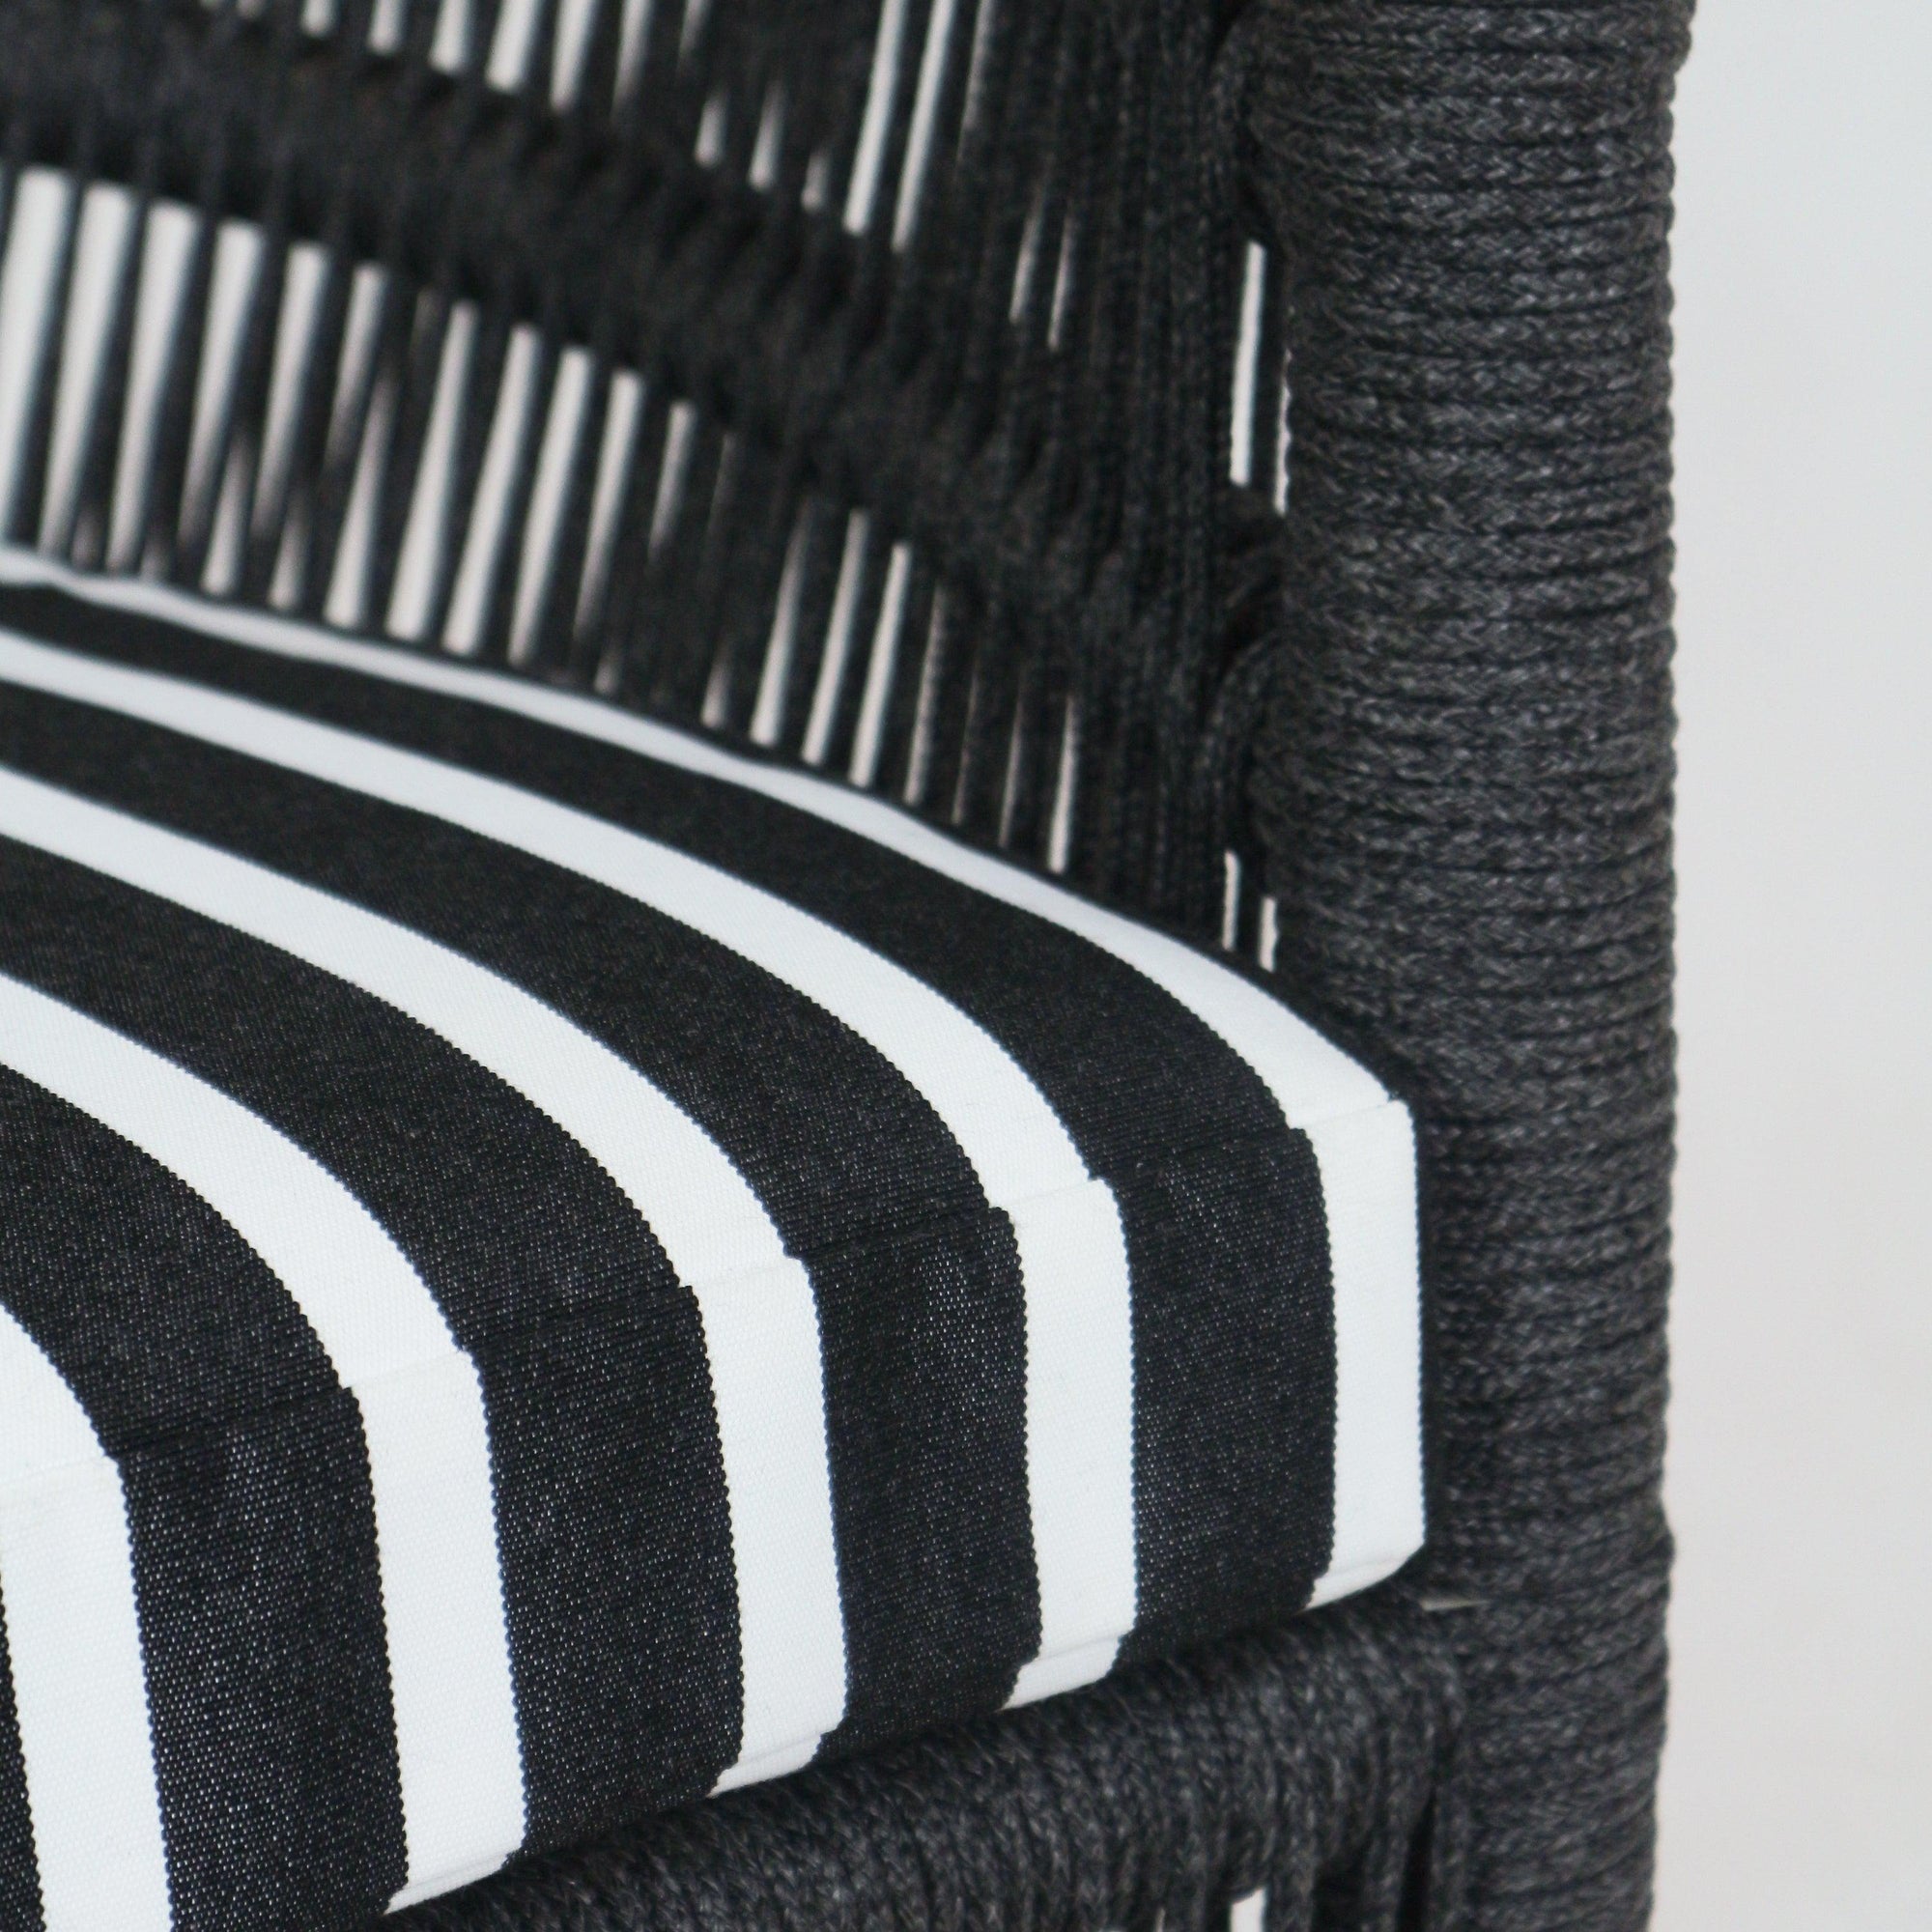 Flora Patio Chair with Sunbrella Fabric